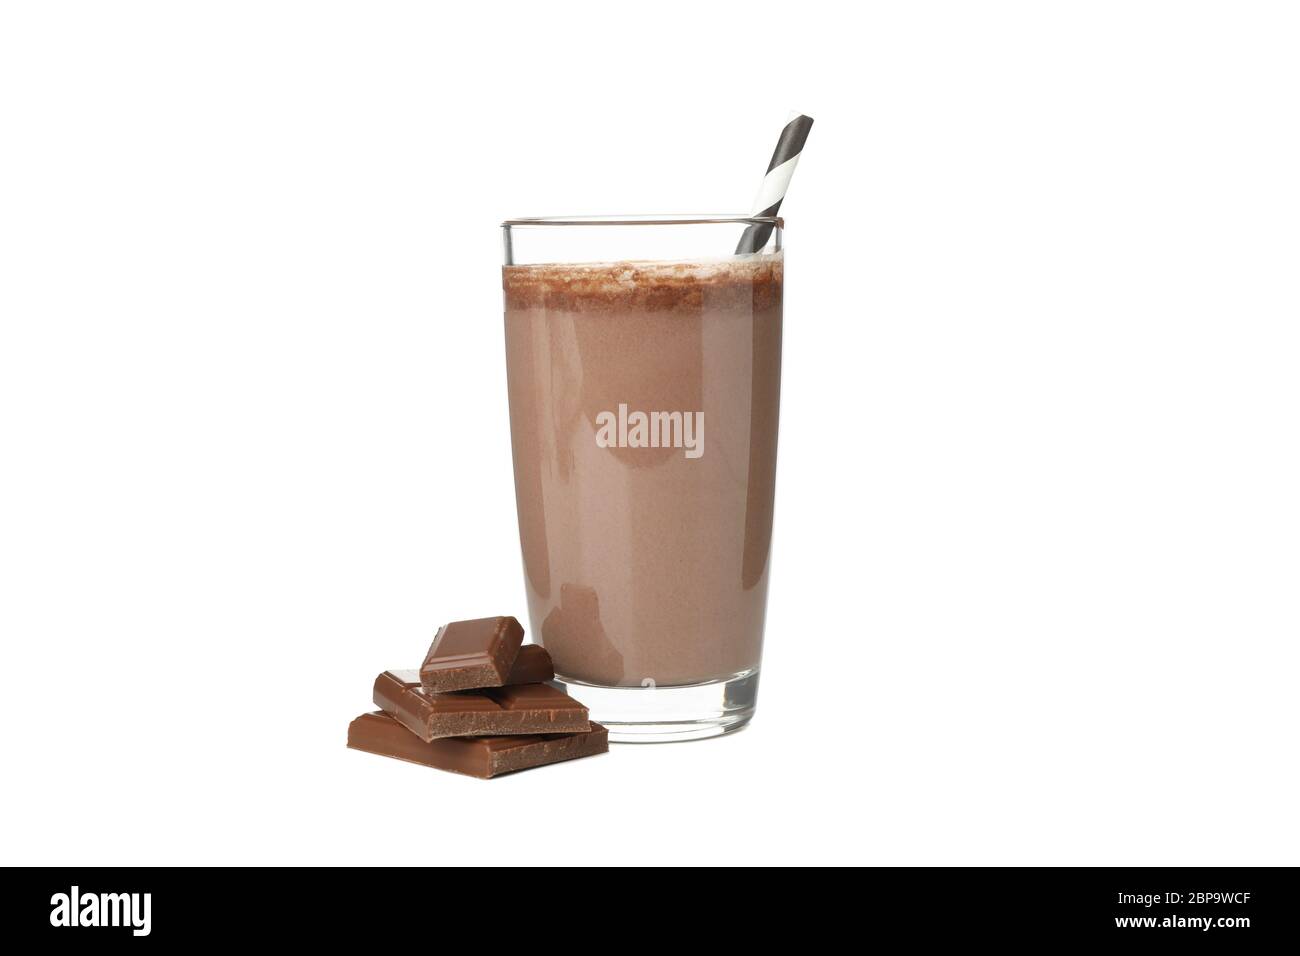 https://c8.alamy.com/comp/2BP9WCF/glass-of-chocolate-milkshake-isolated-on-white-background-2BP9WCF.jpg